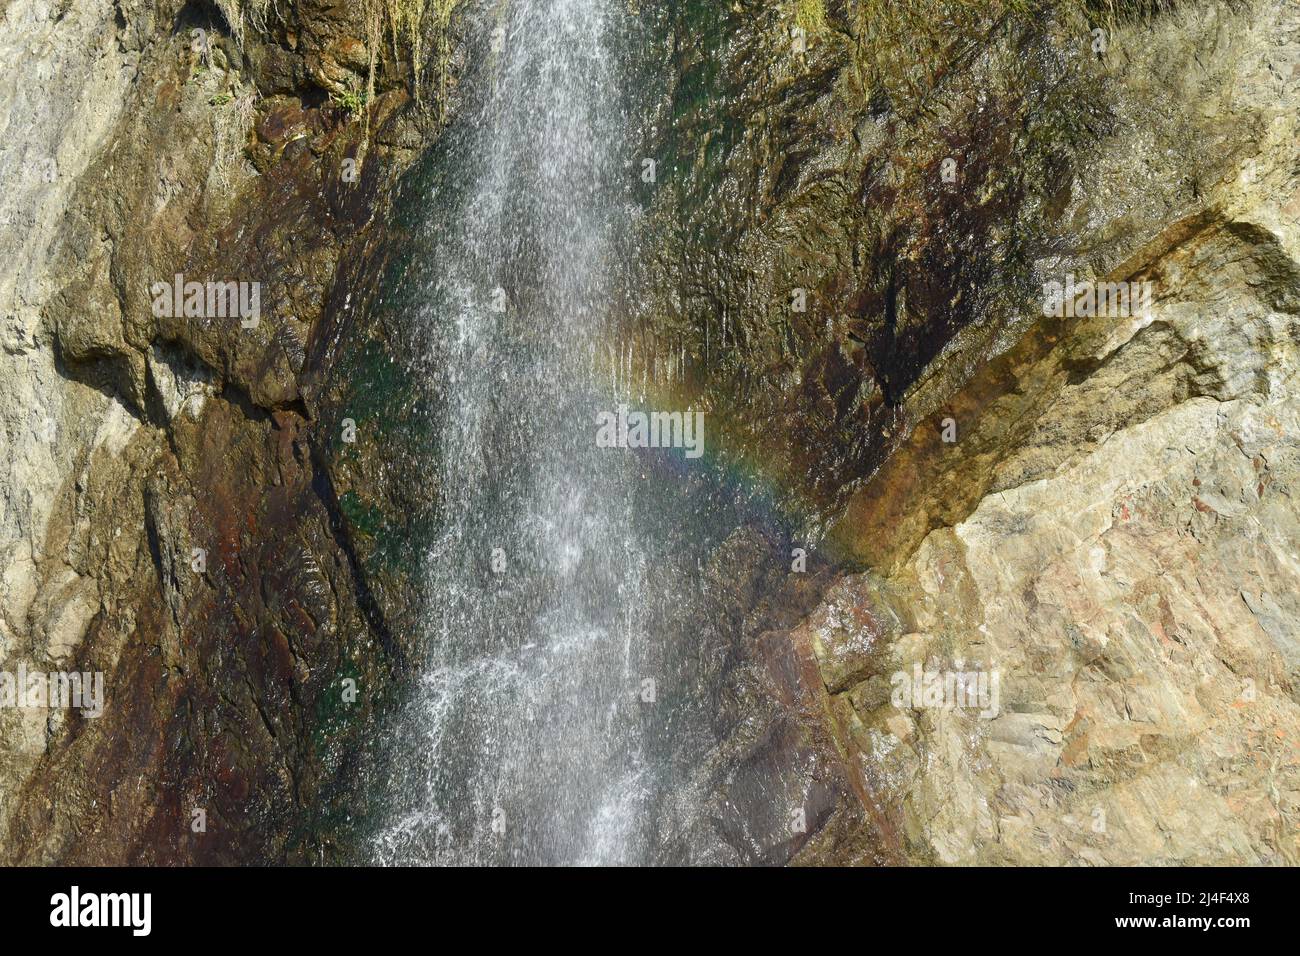 Limestone, Waterfall, Cascade, Spray, Spraying Water, Rainbow, Beauty in Nature, Cliff, Wet Rock, Rocks, Sandstone, Copper Coast, Ireland, Prism Stock Photo